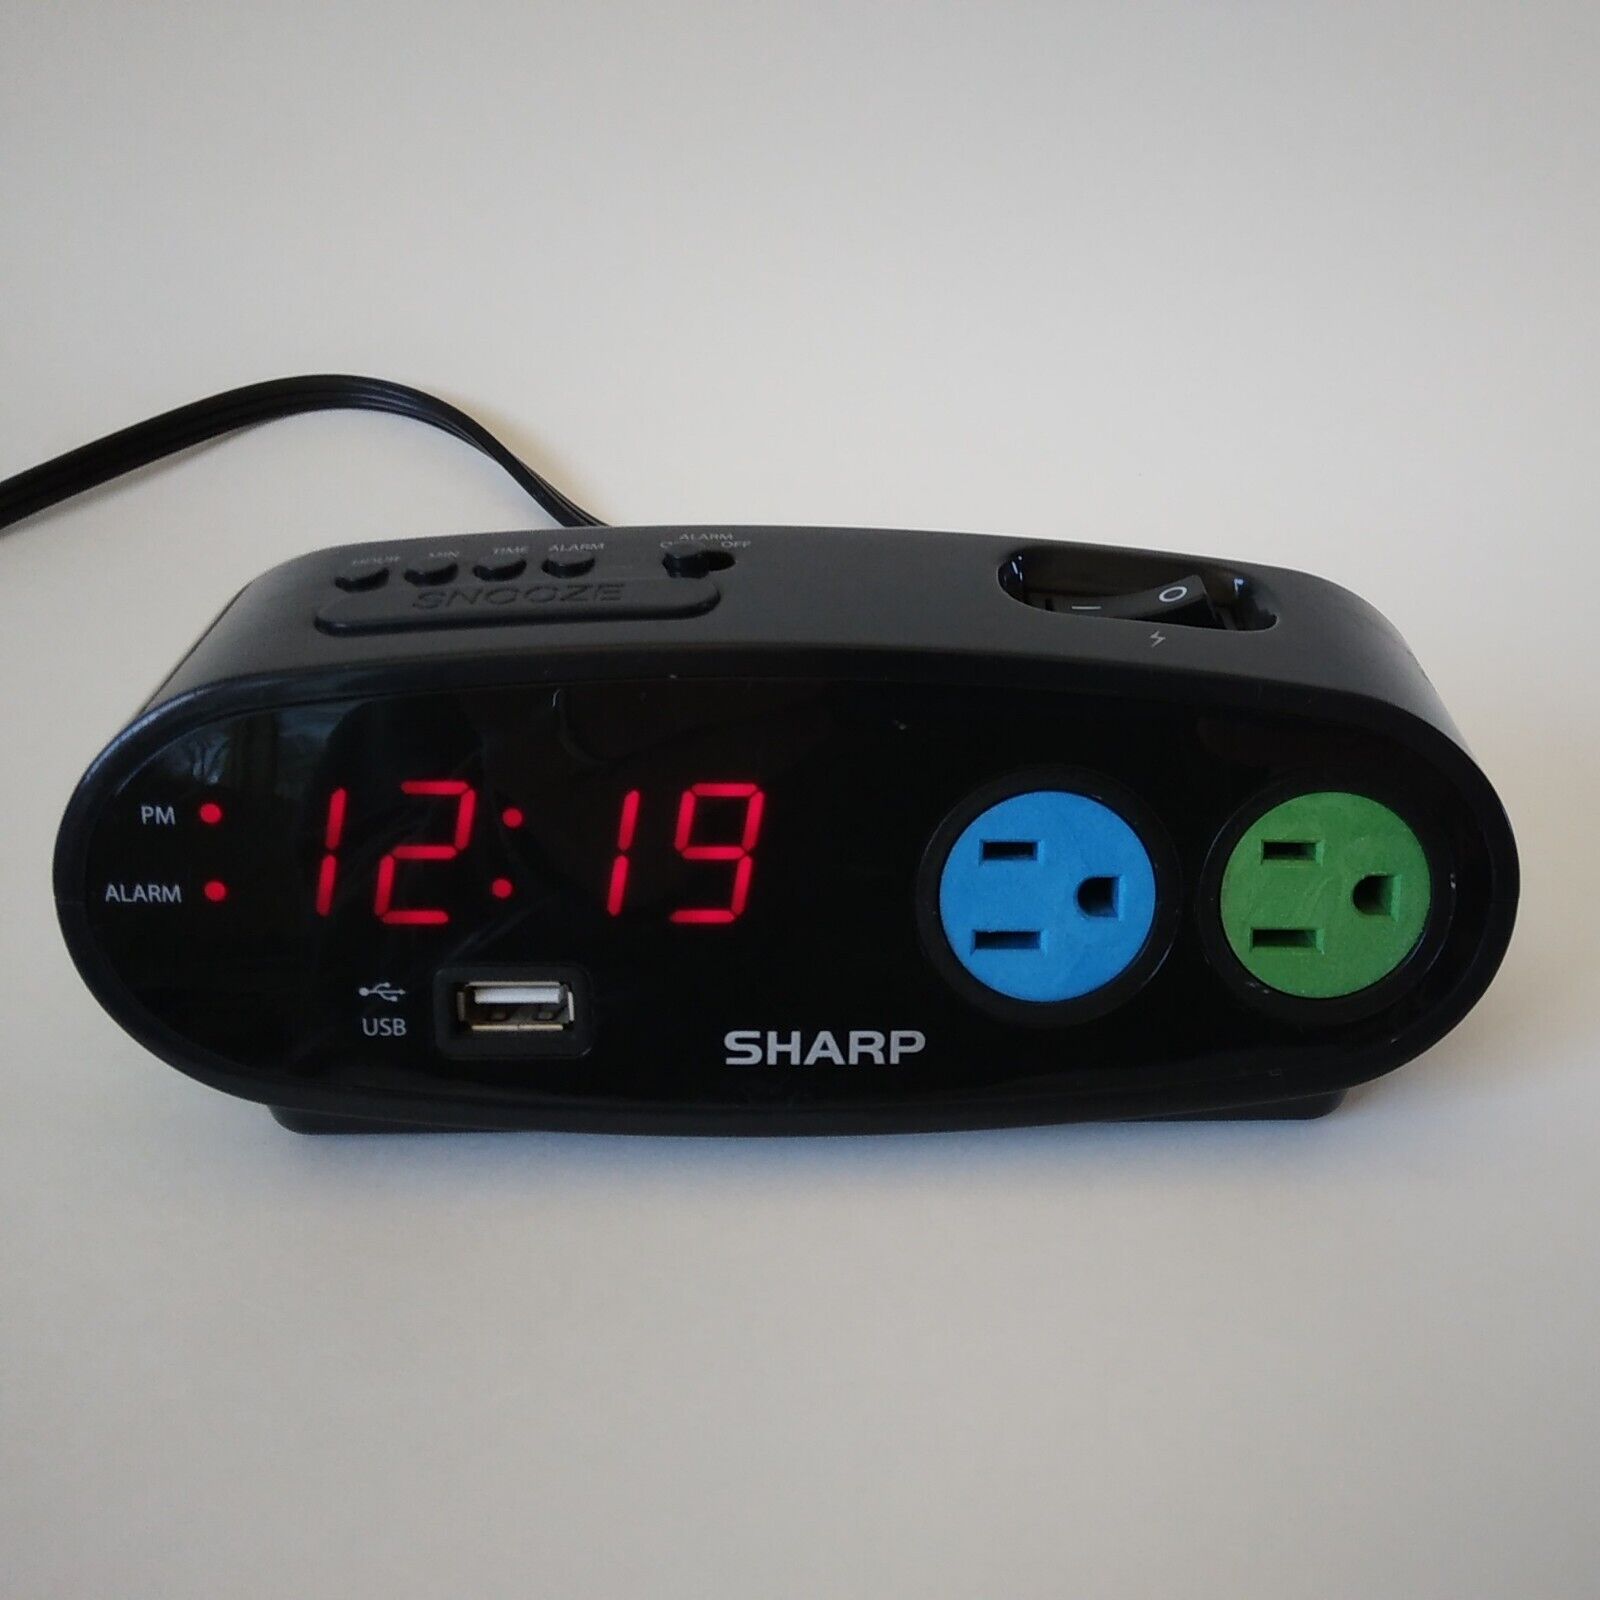 Sharp Model: SPC136 Alarm Clock-USB Power Port+Receptacles-Red LED-Tested Works